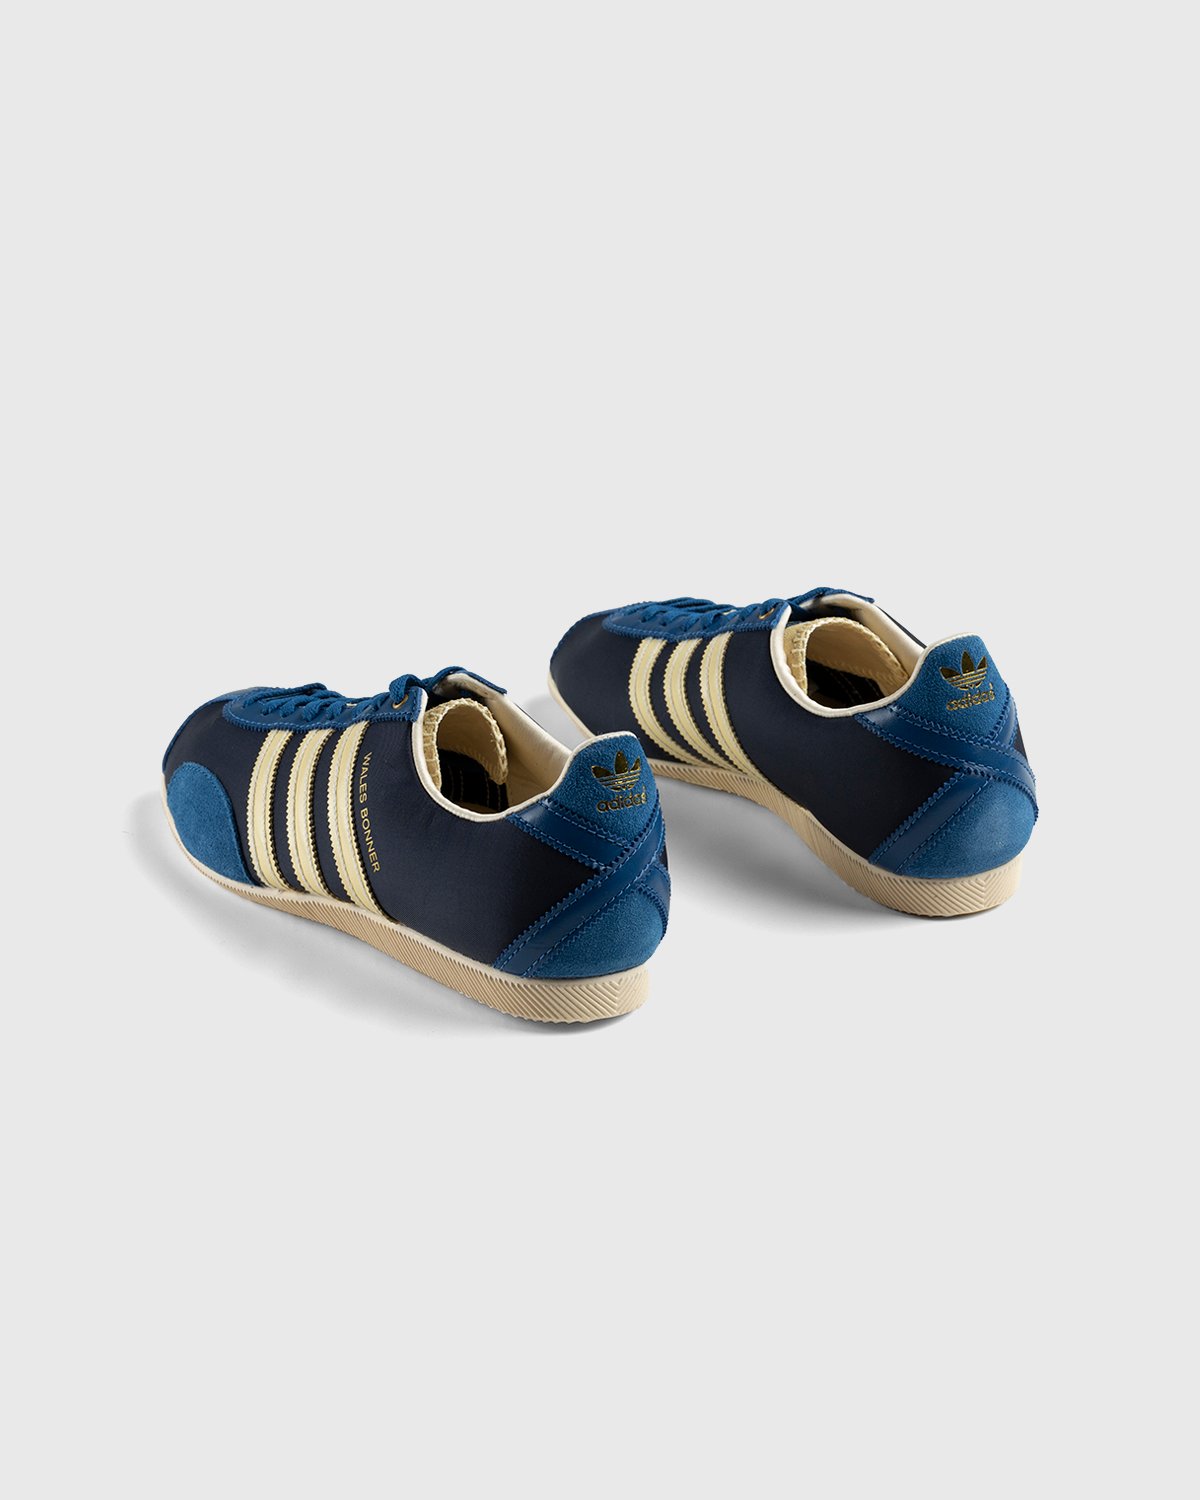 Adidas x Wales Bonner - Japan Legend Ink/Dark Marine/Ecru Tint - Footwear - Blue - Image 4